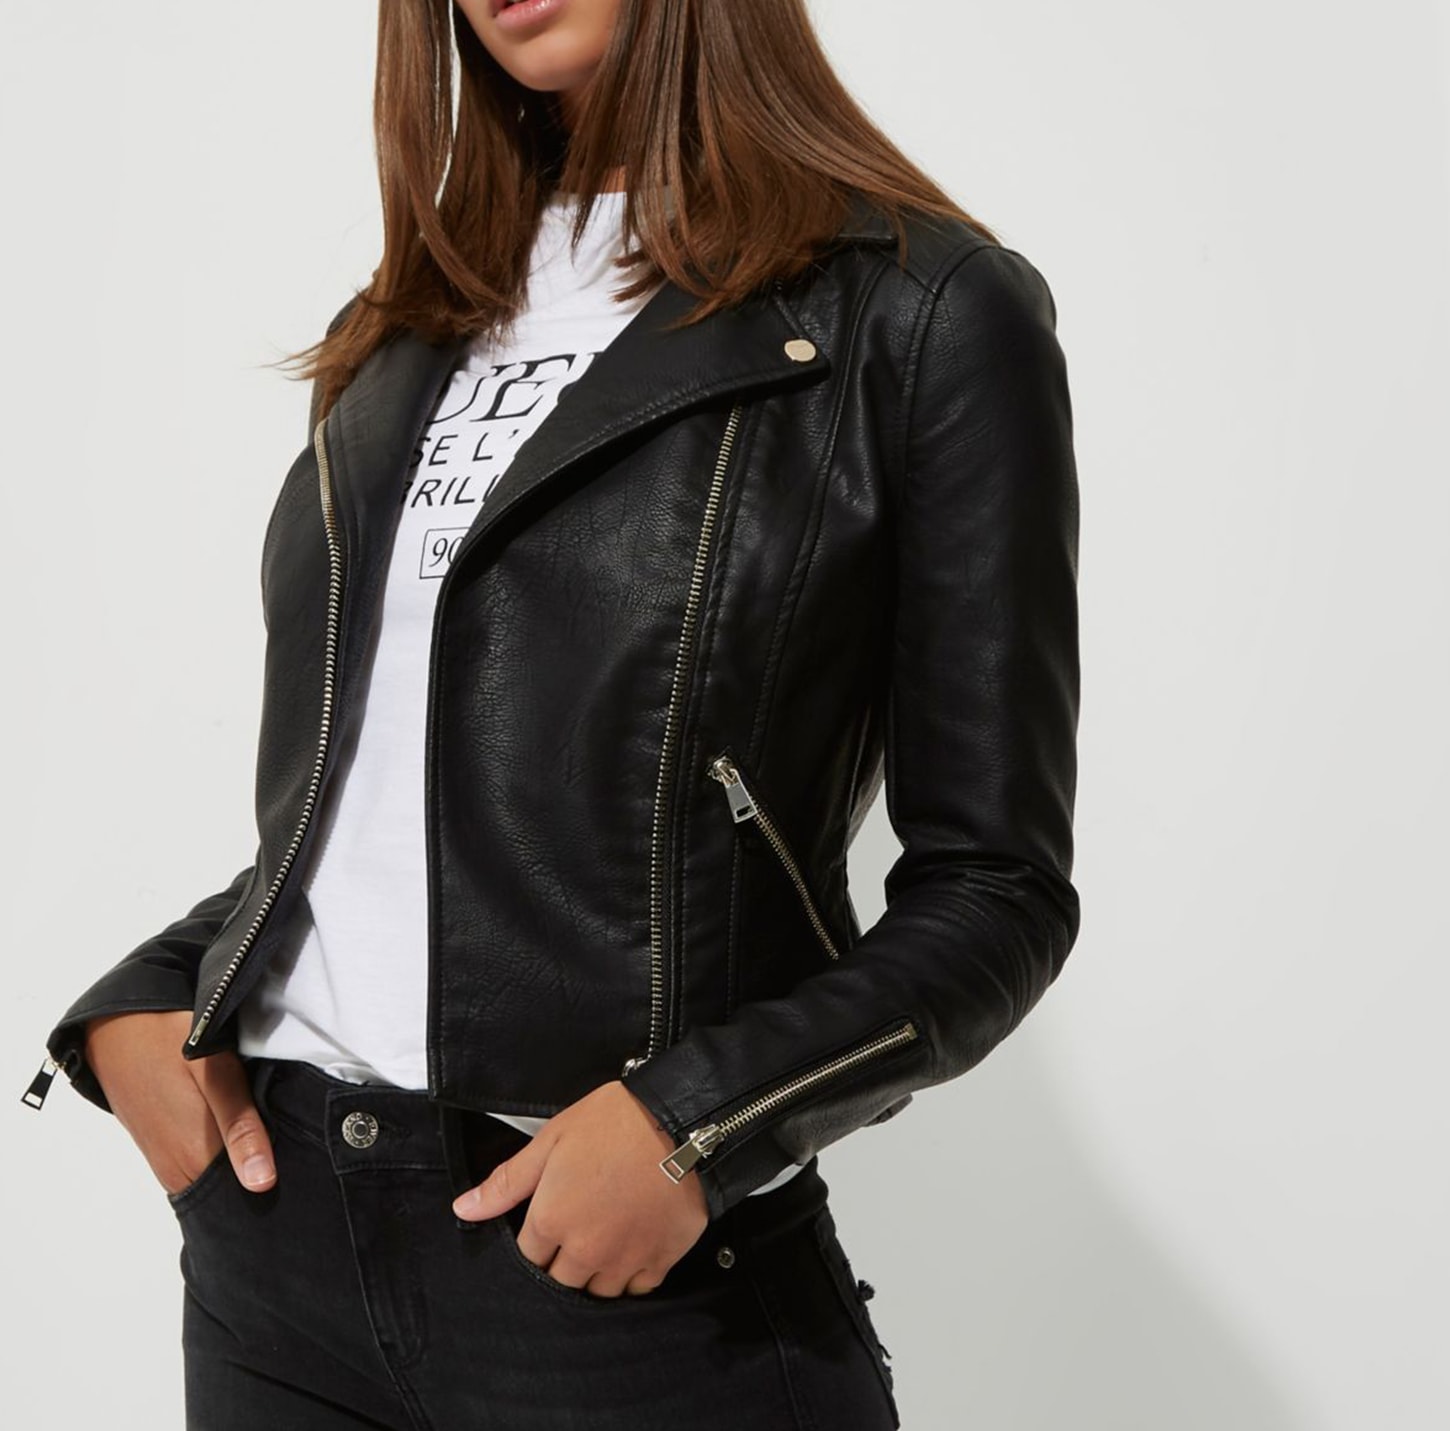 faux leather jacket